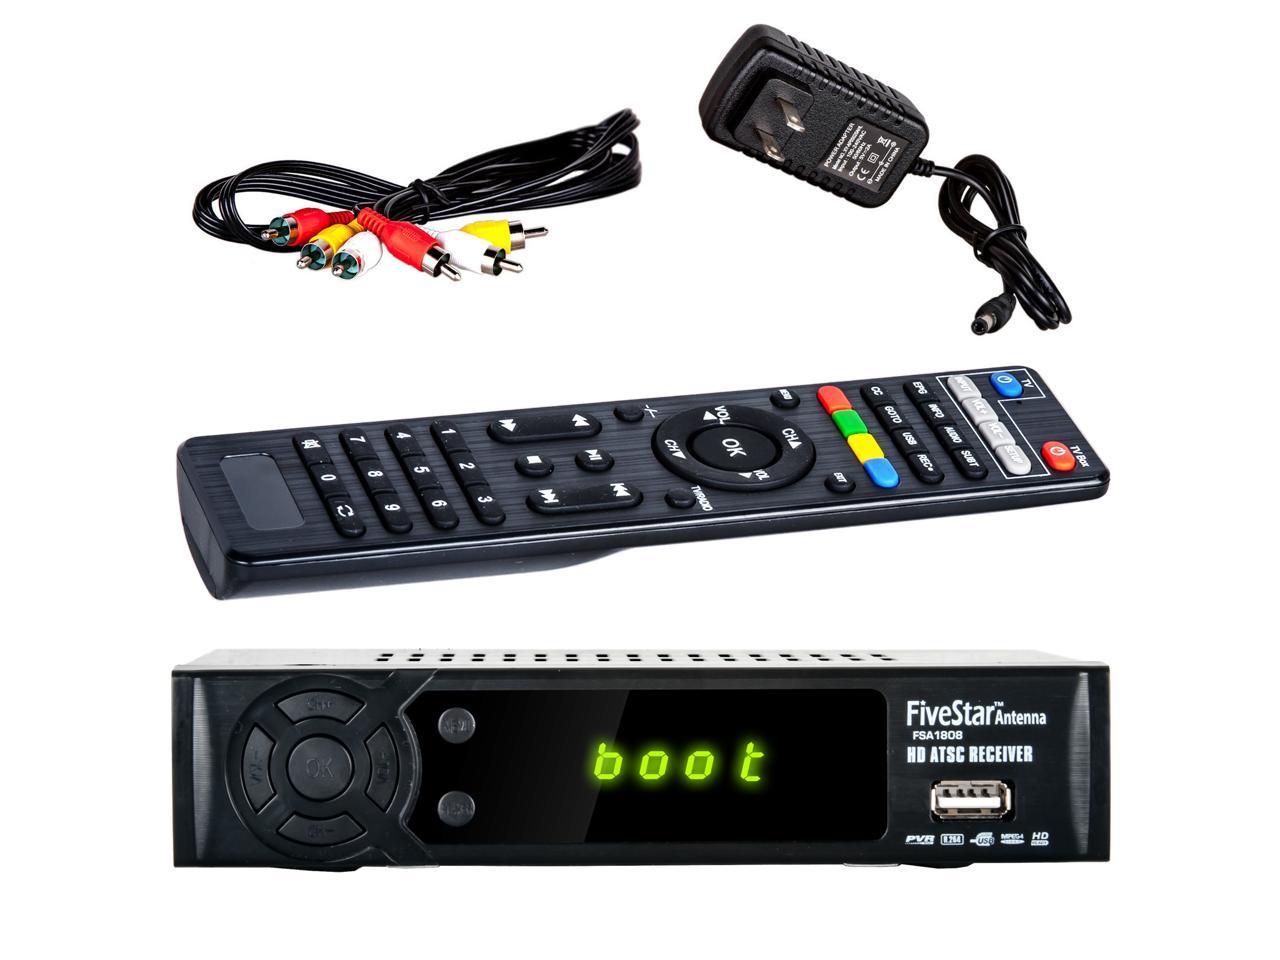 digital stream digital to analog tv converter box